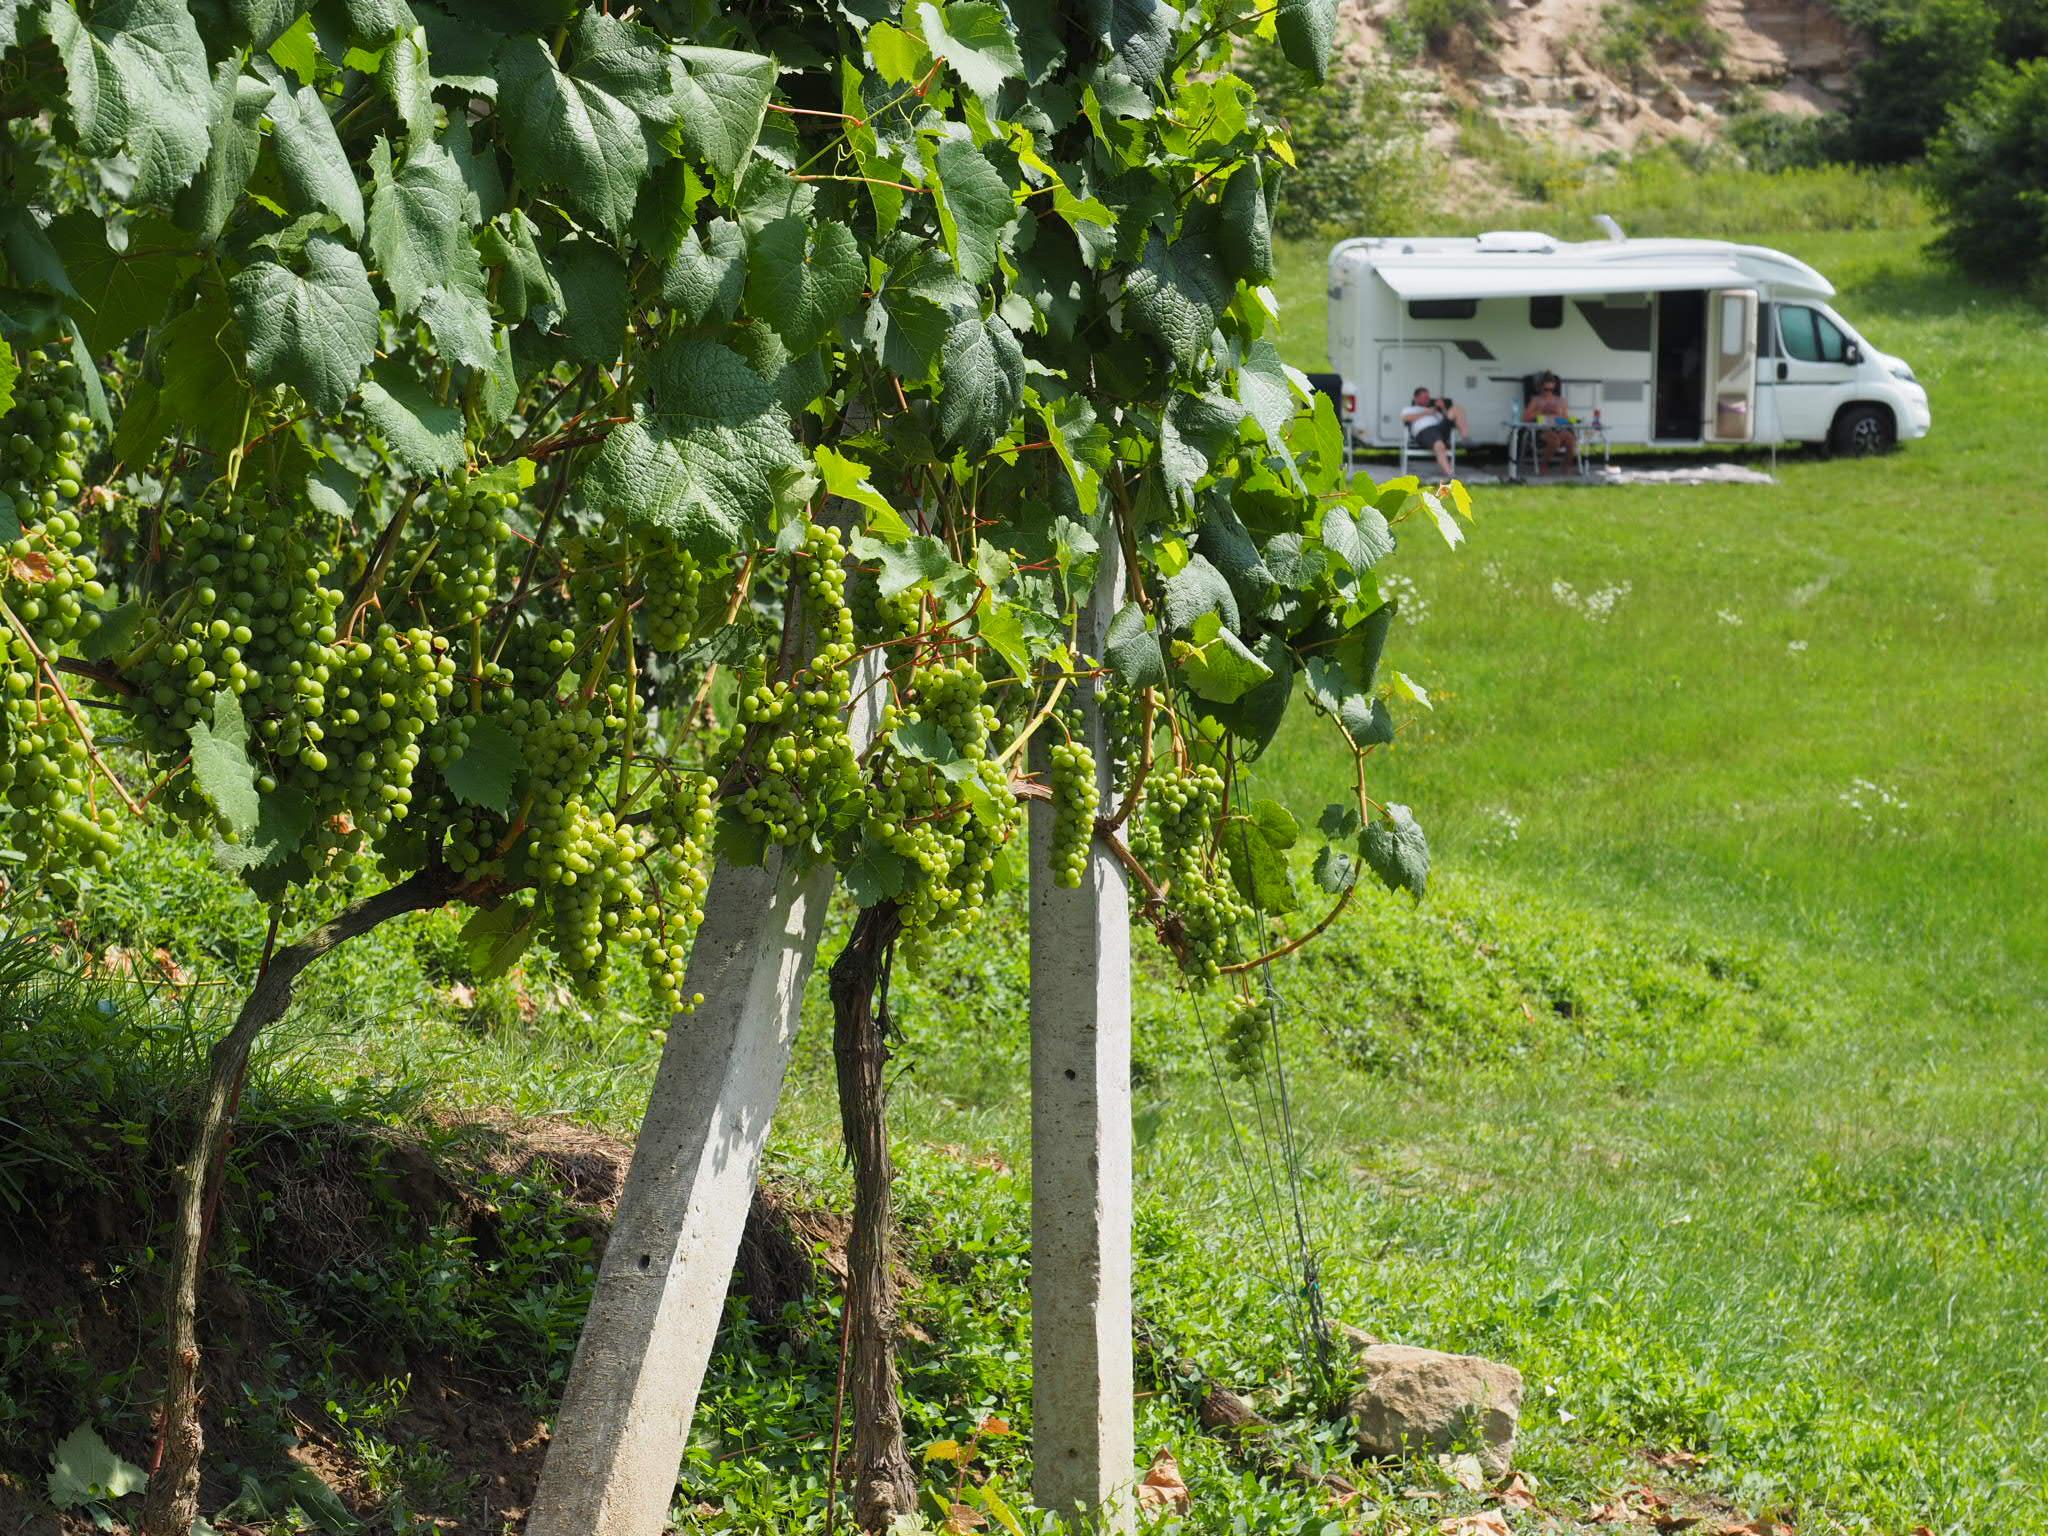 44 Polish vineyards friendly to motorhomes – image 4